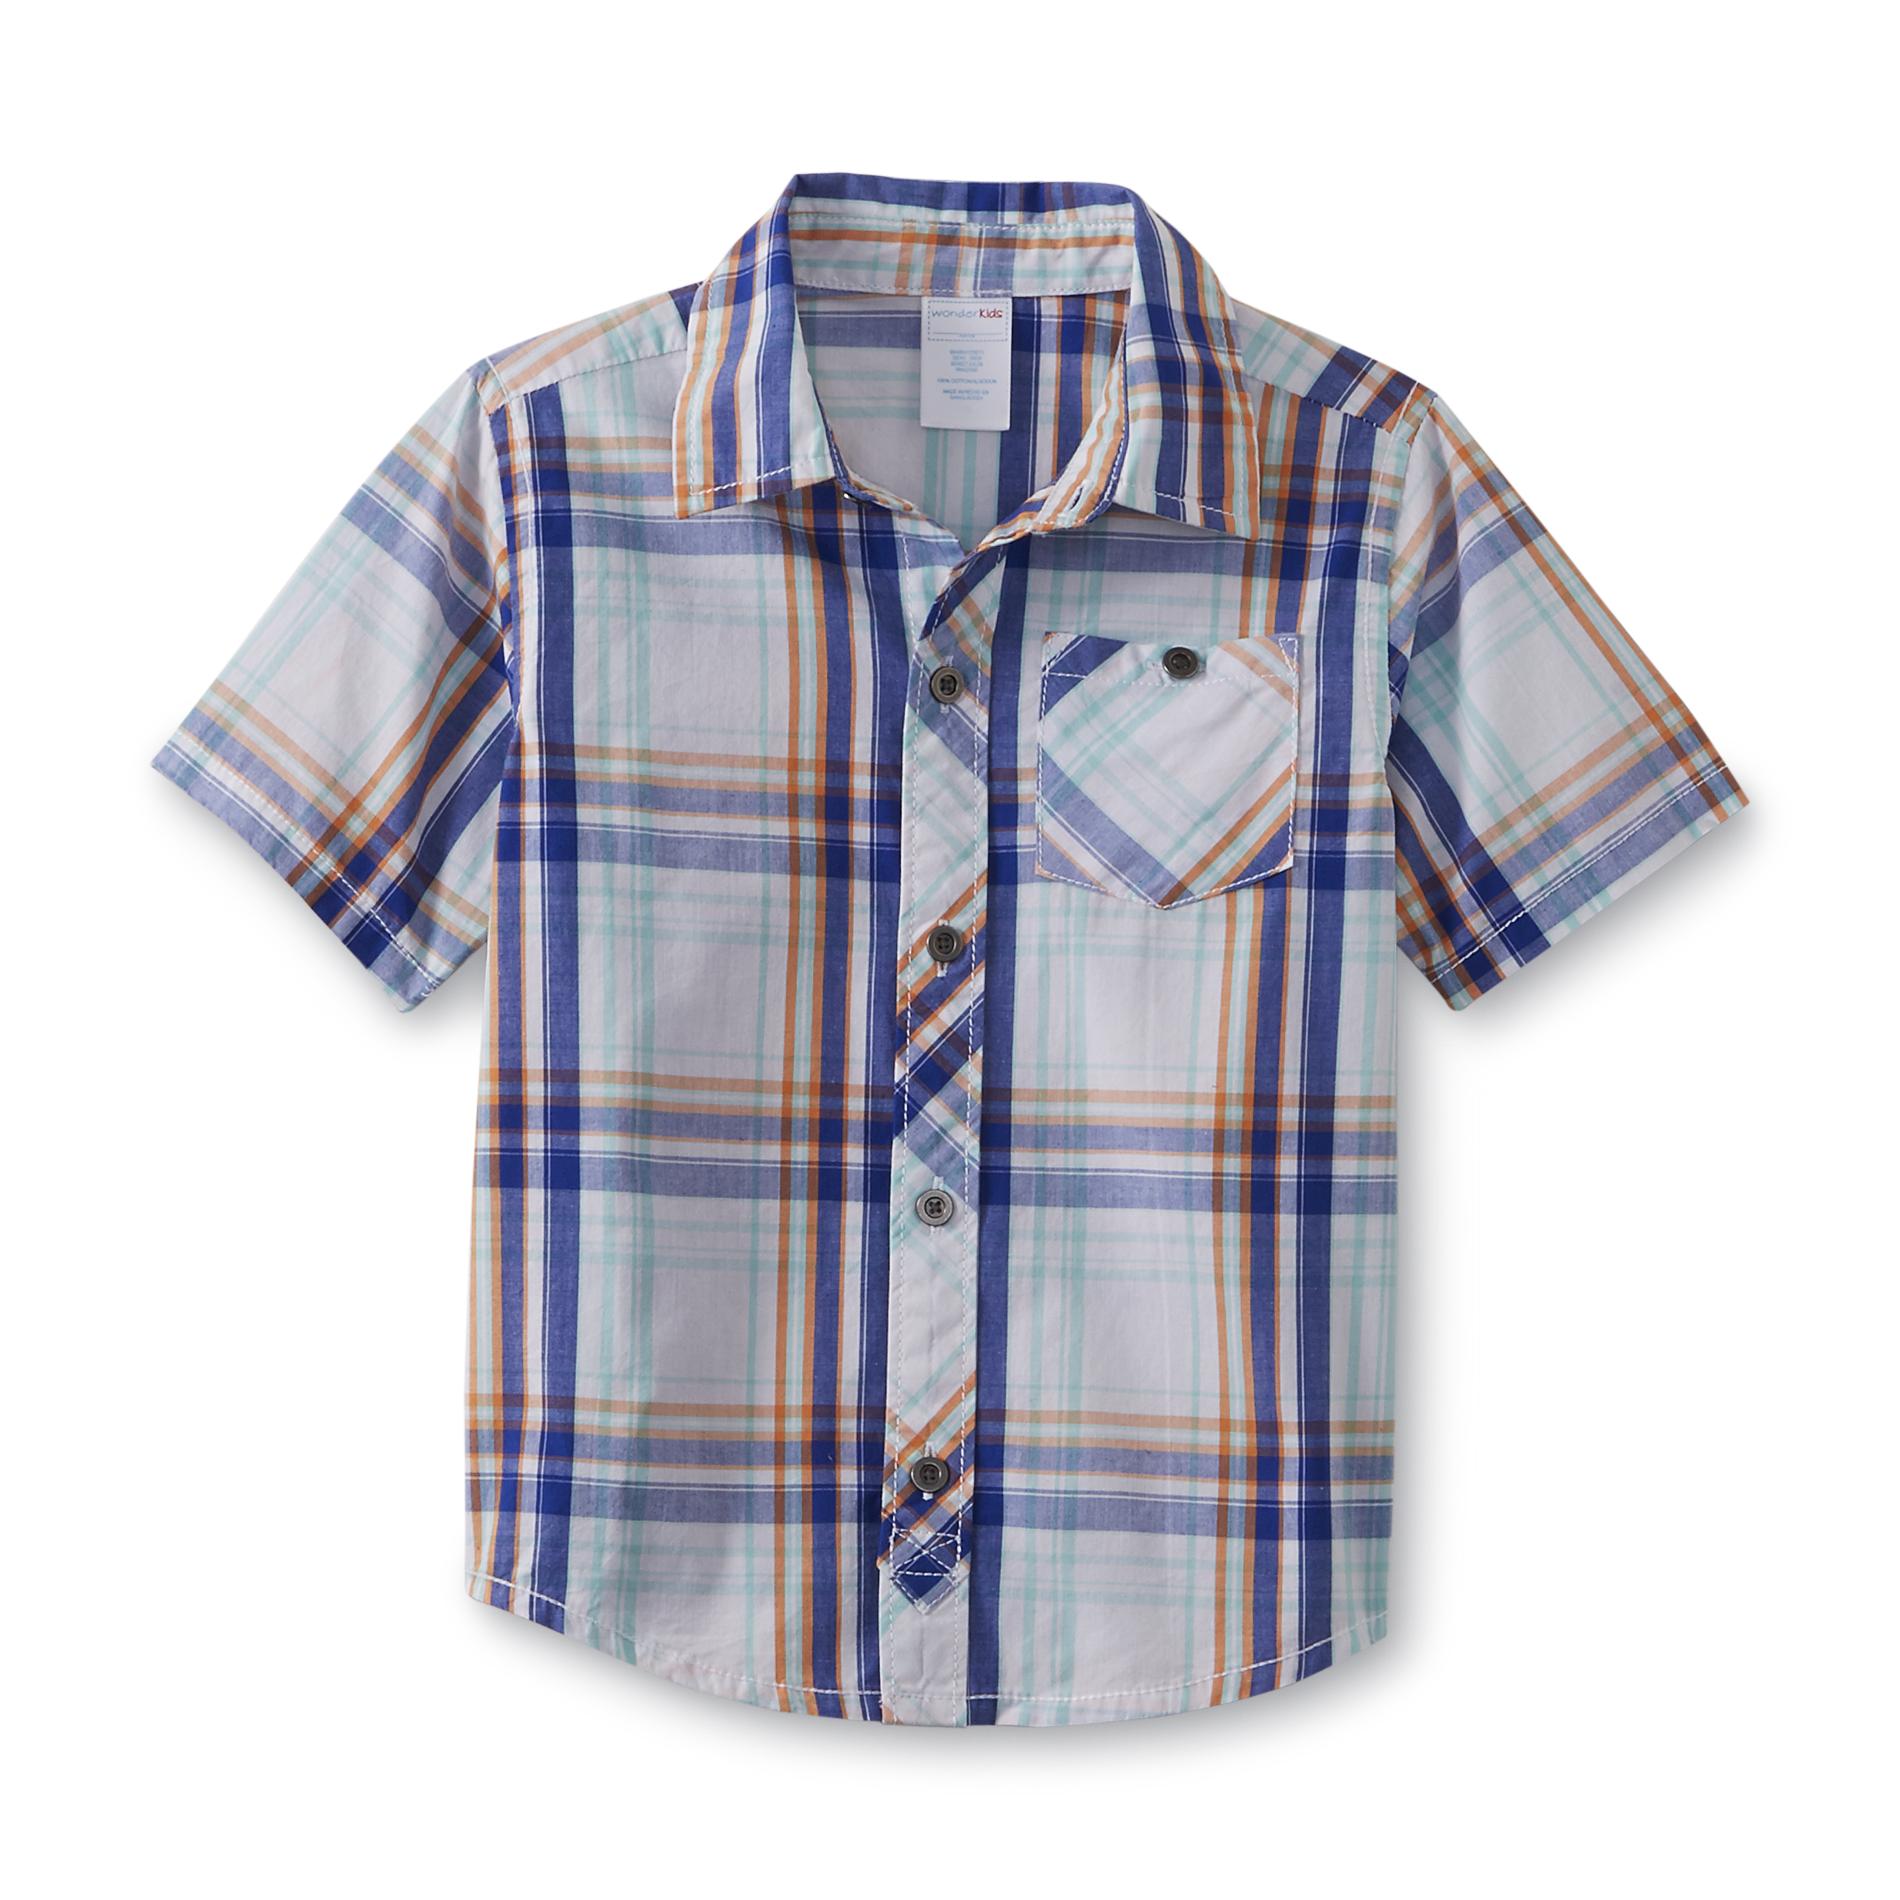 WonderKids Infant & Toddler Boy's Short-Sleeve Shirt - Plaid